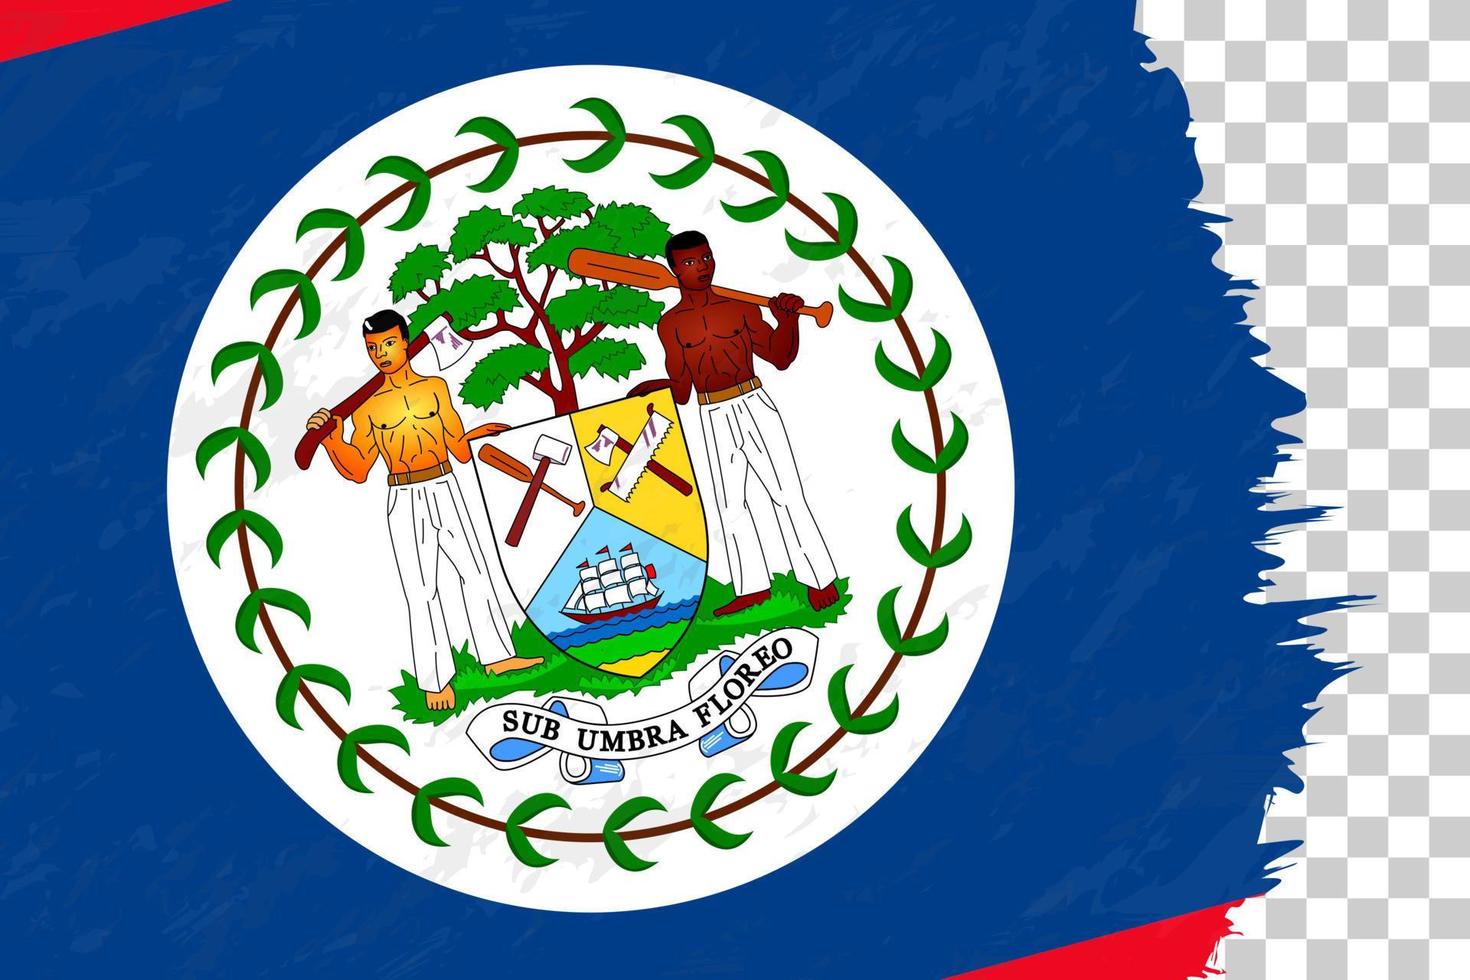 Horizontal Abstract Grunge Brushed Flag of Belize on Transparent Grid. vector